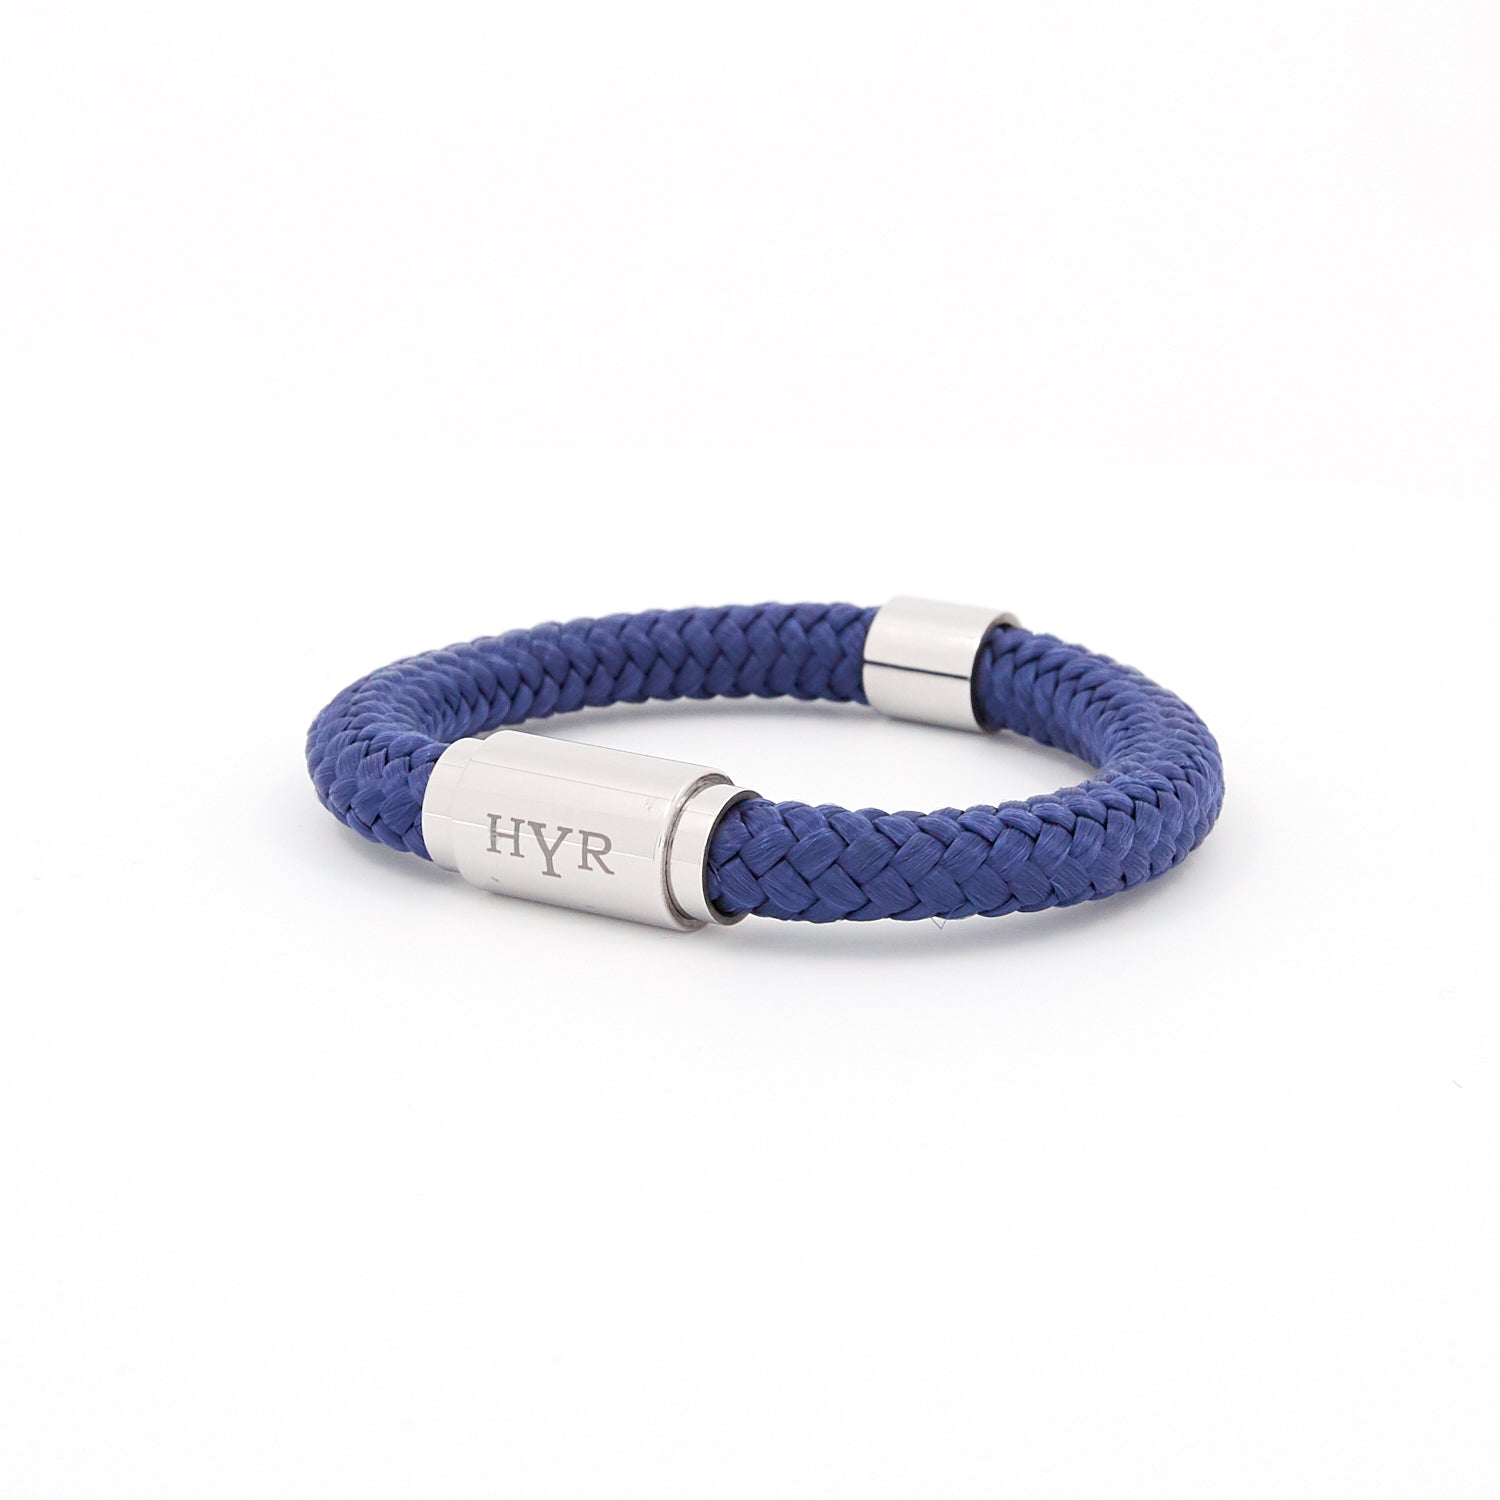 First class navy rope bracelet - silver